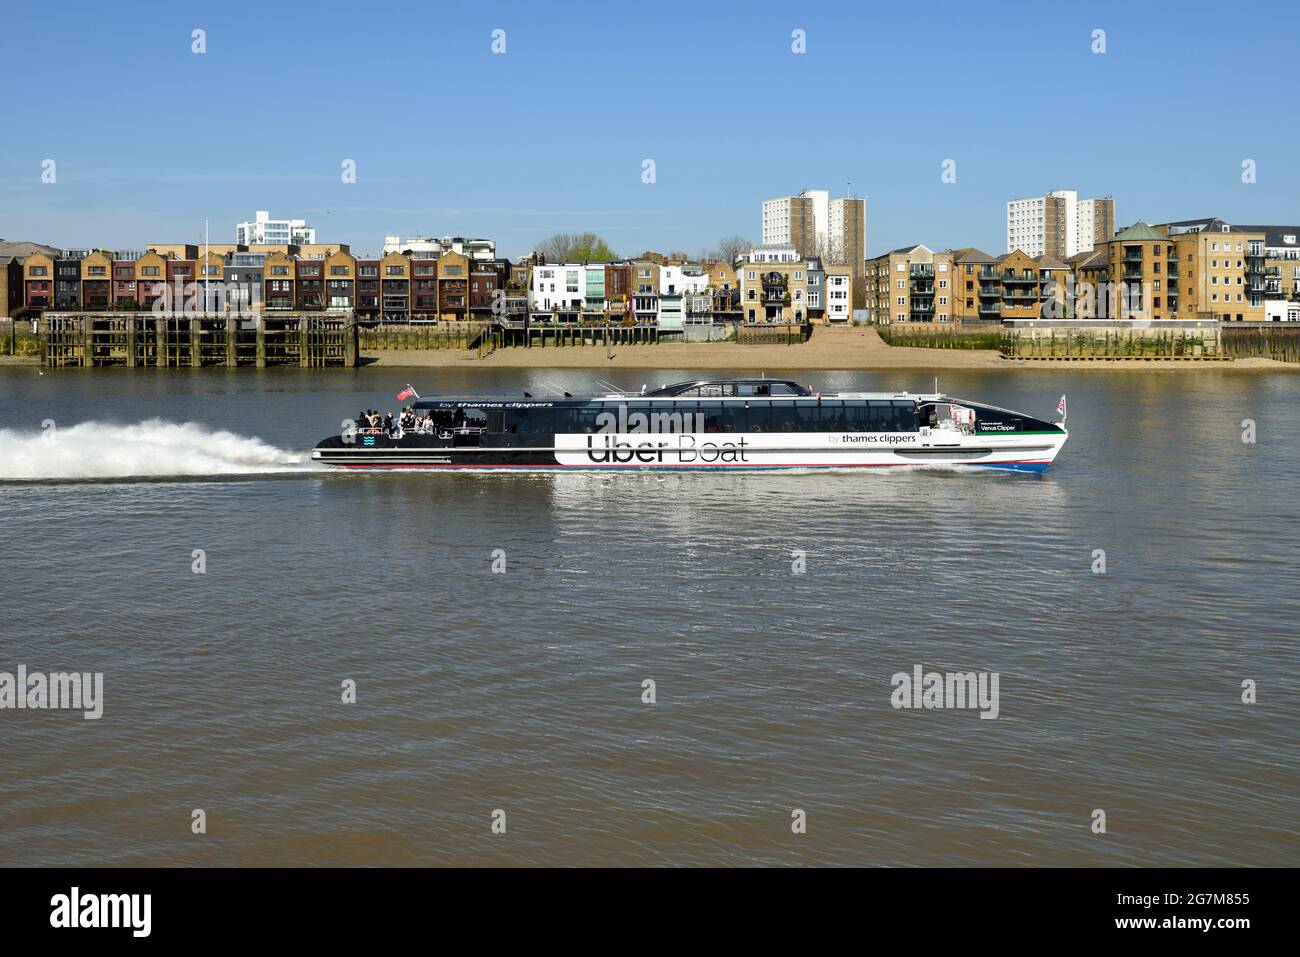 Barco Uber Thames Clippers, río Támesis, Limehouse, East London, Reino Unido Foto de stock